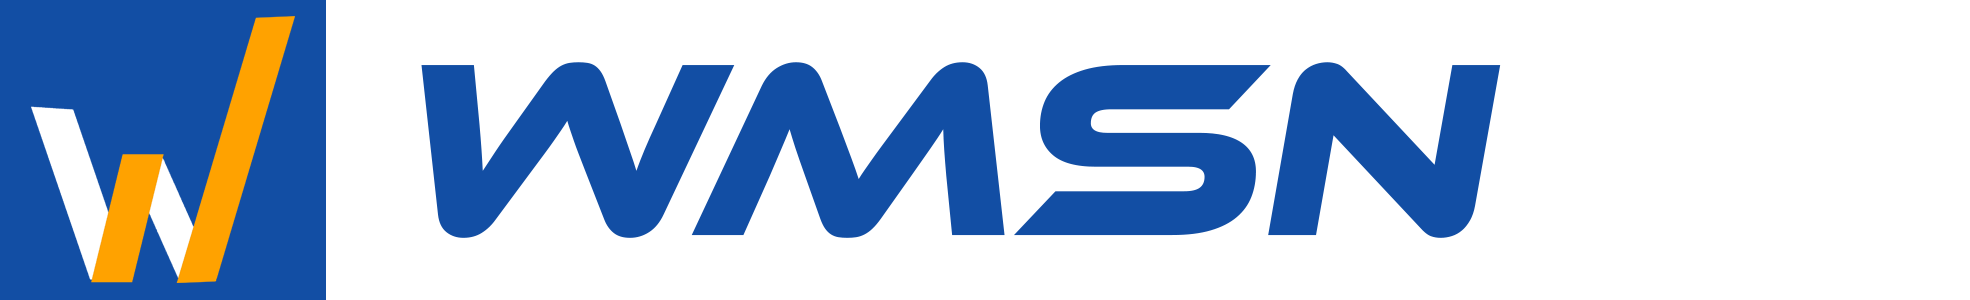 WMSN brand logo